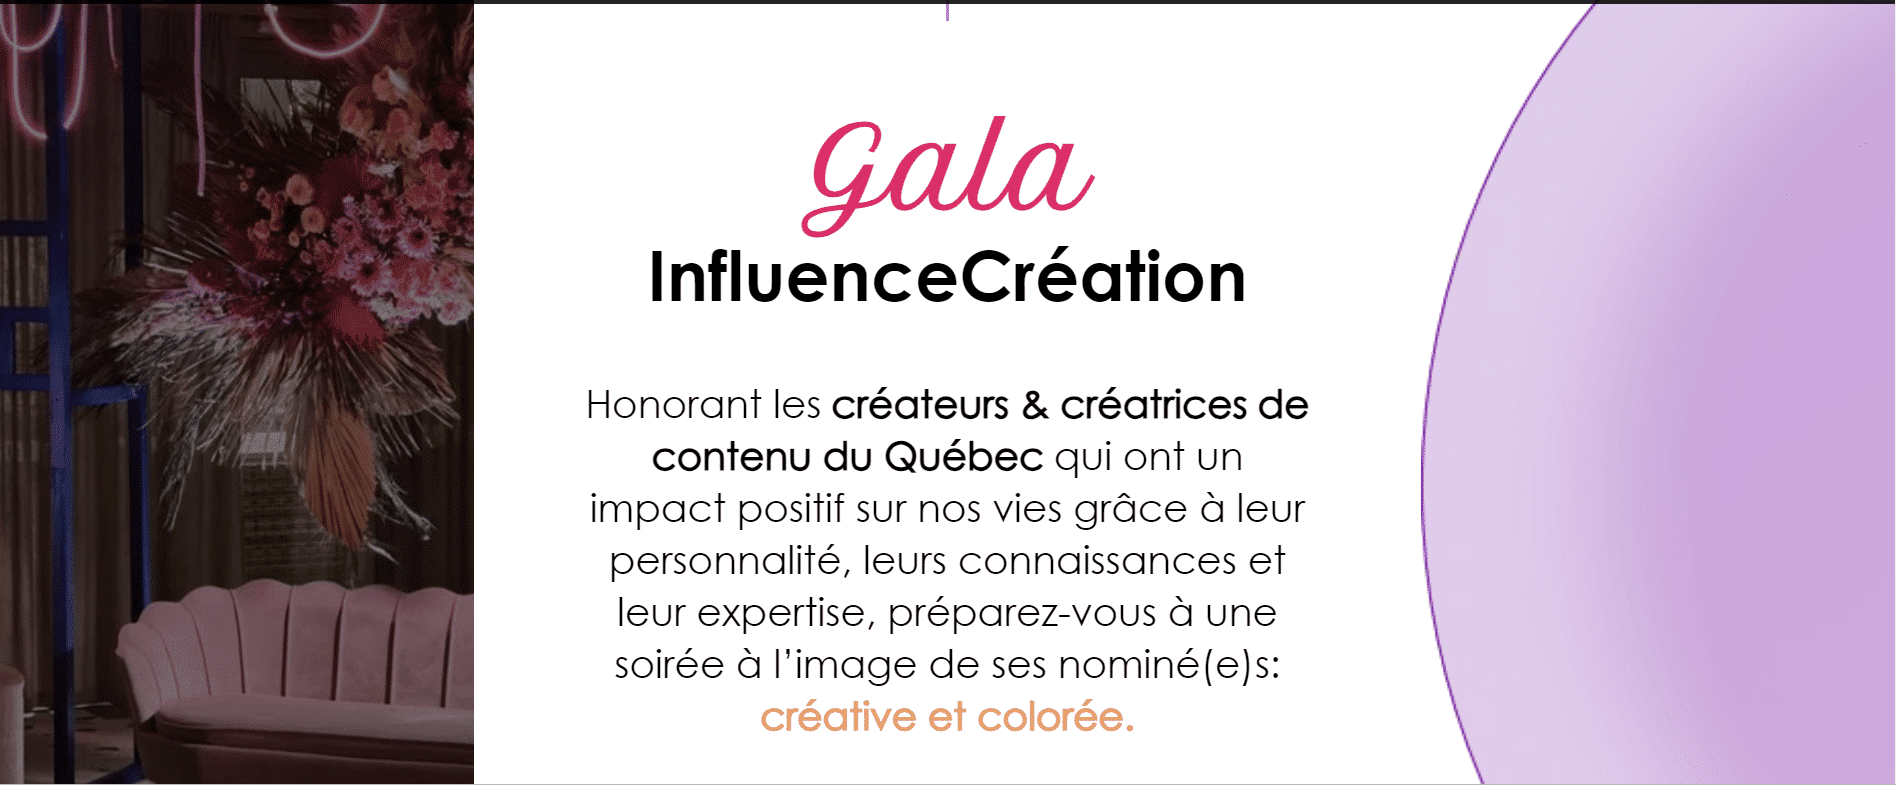 InfluenceCreation's Gala honouring the creators